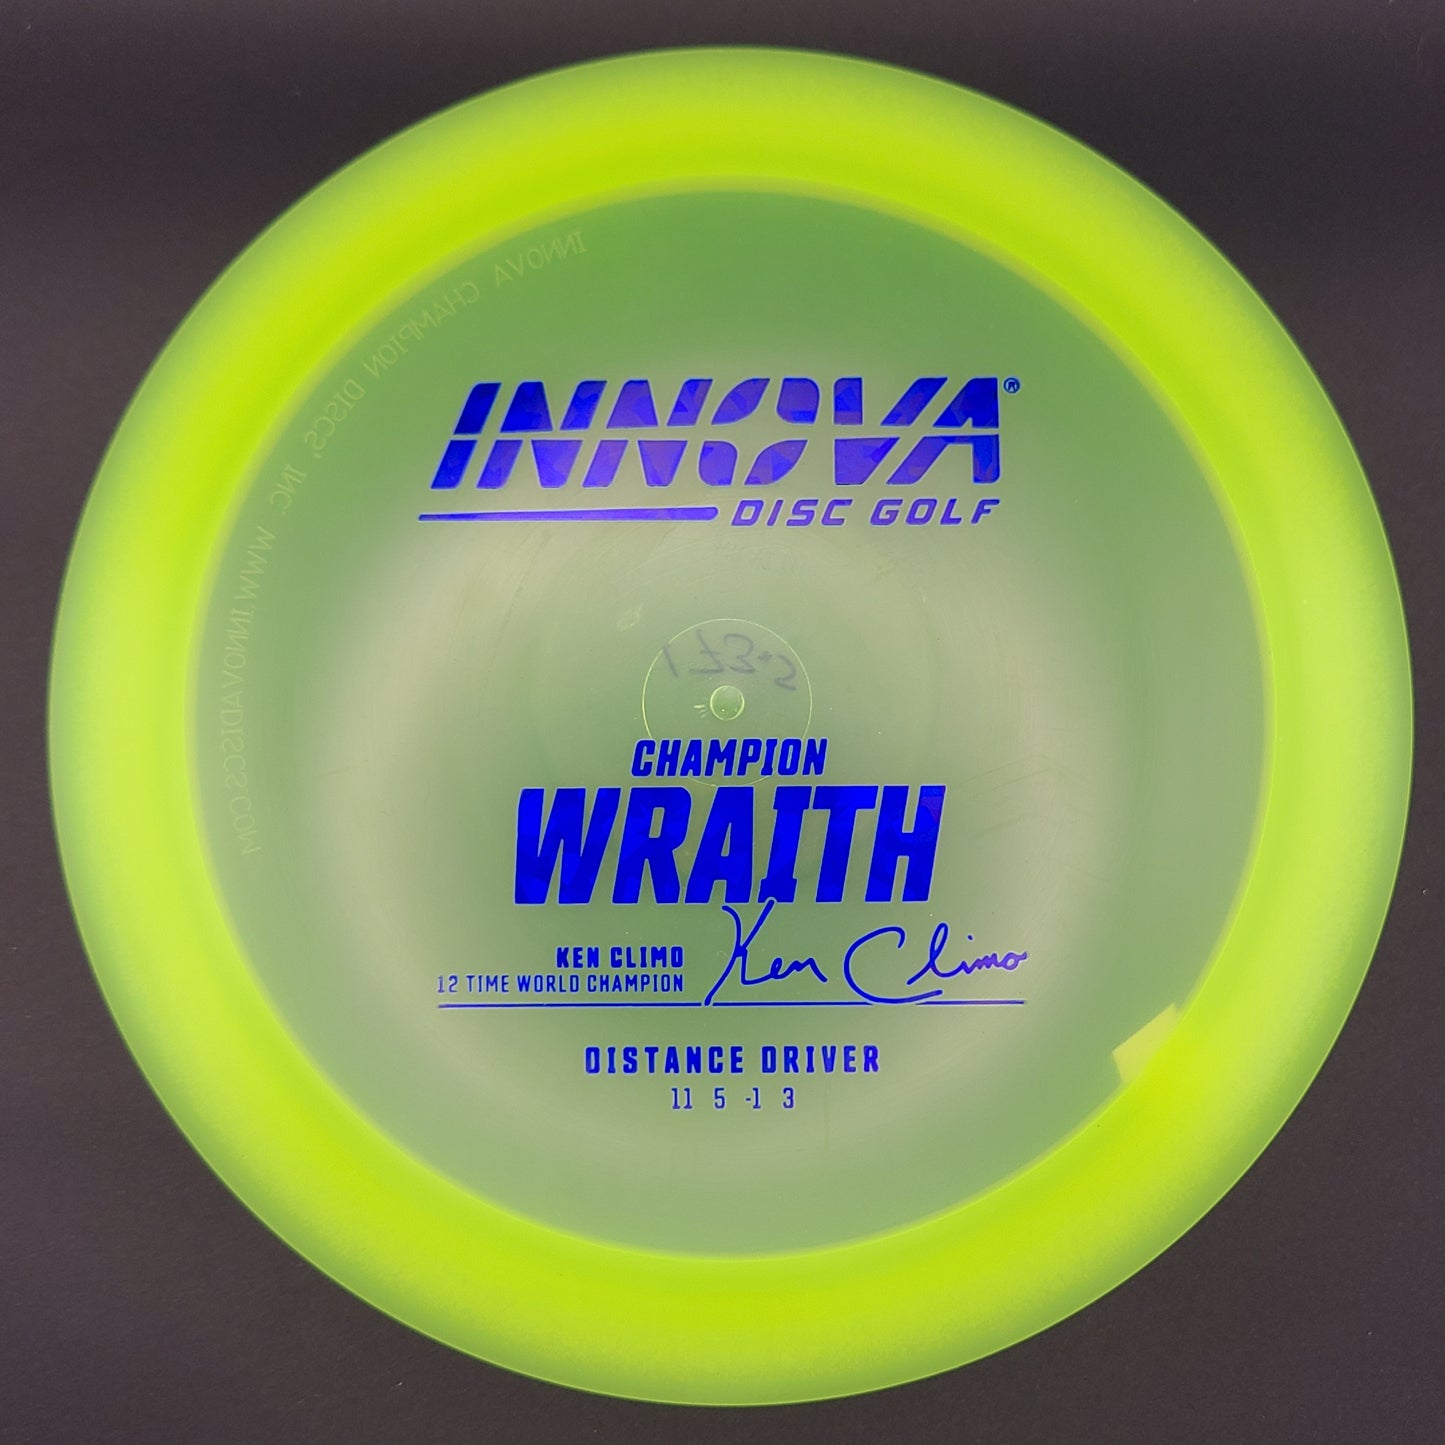 Innova - Wraith - Champion